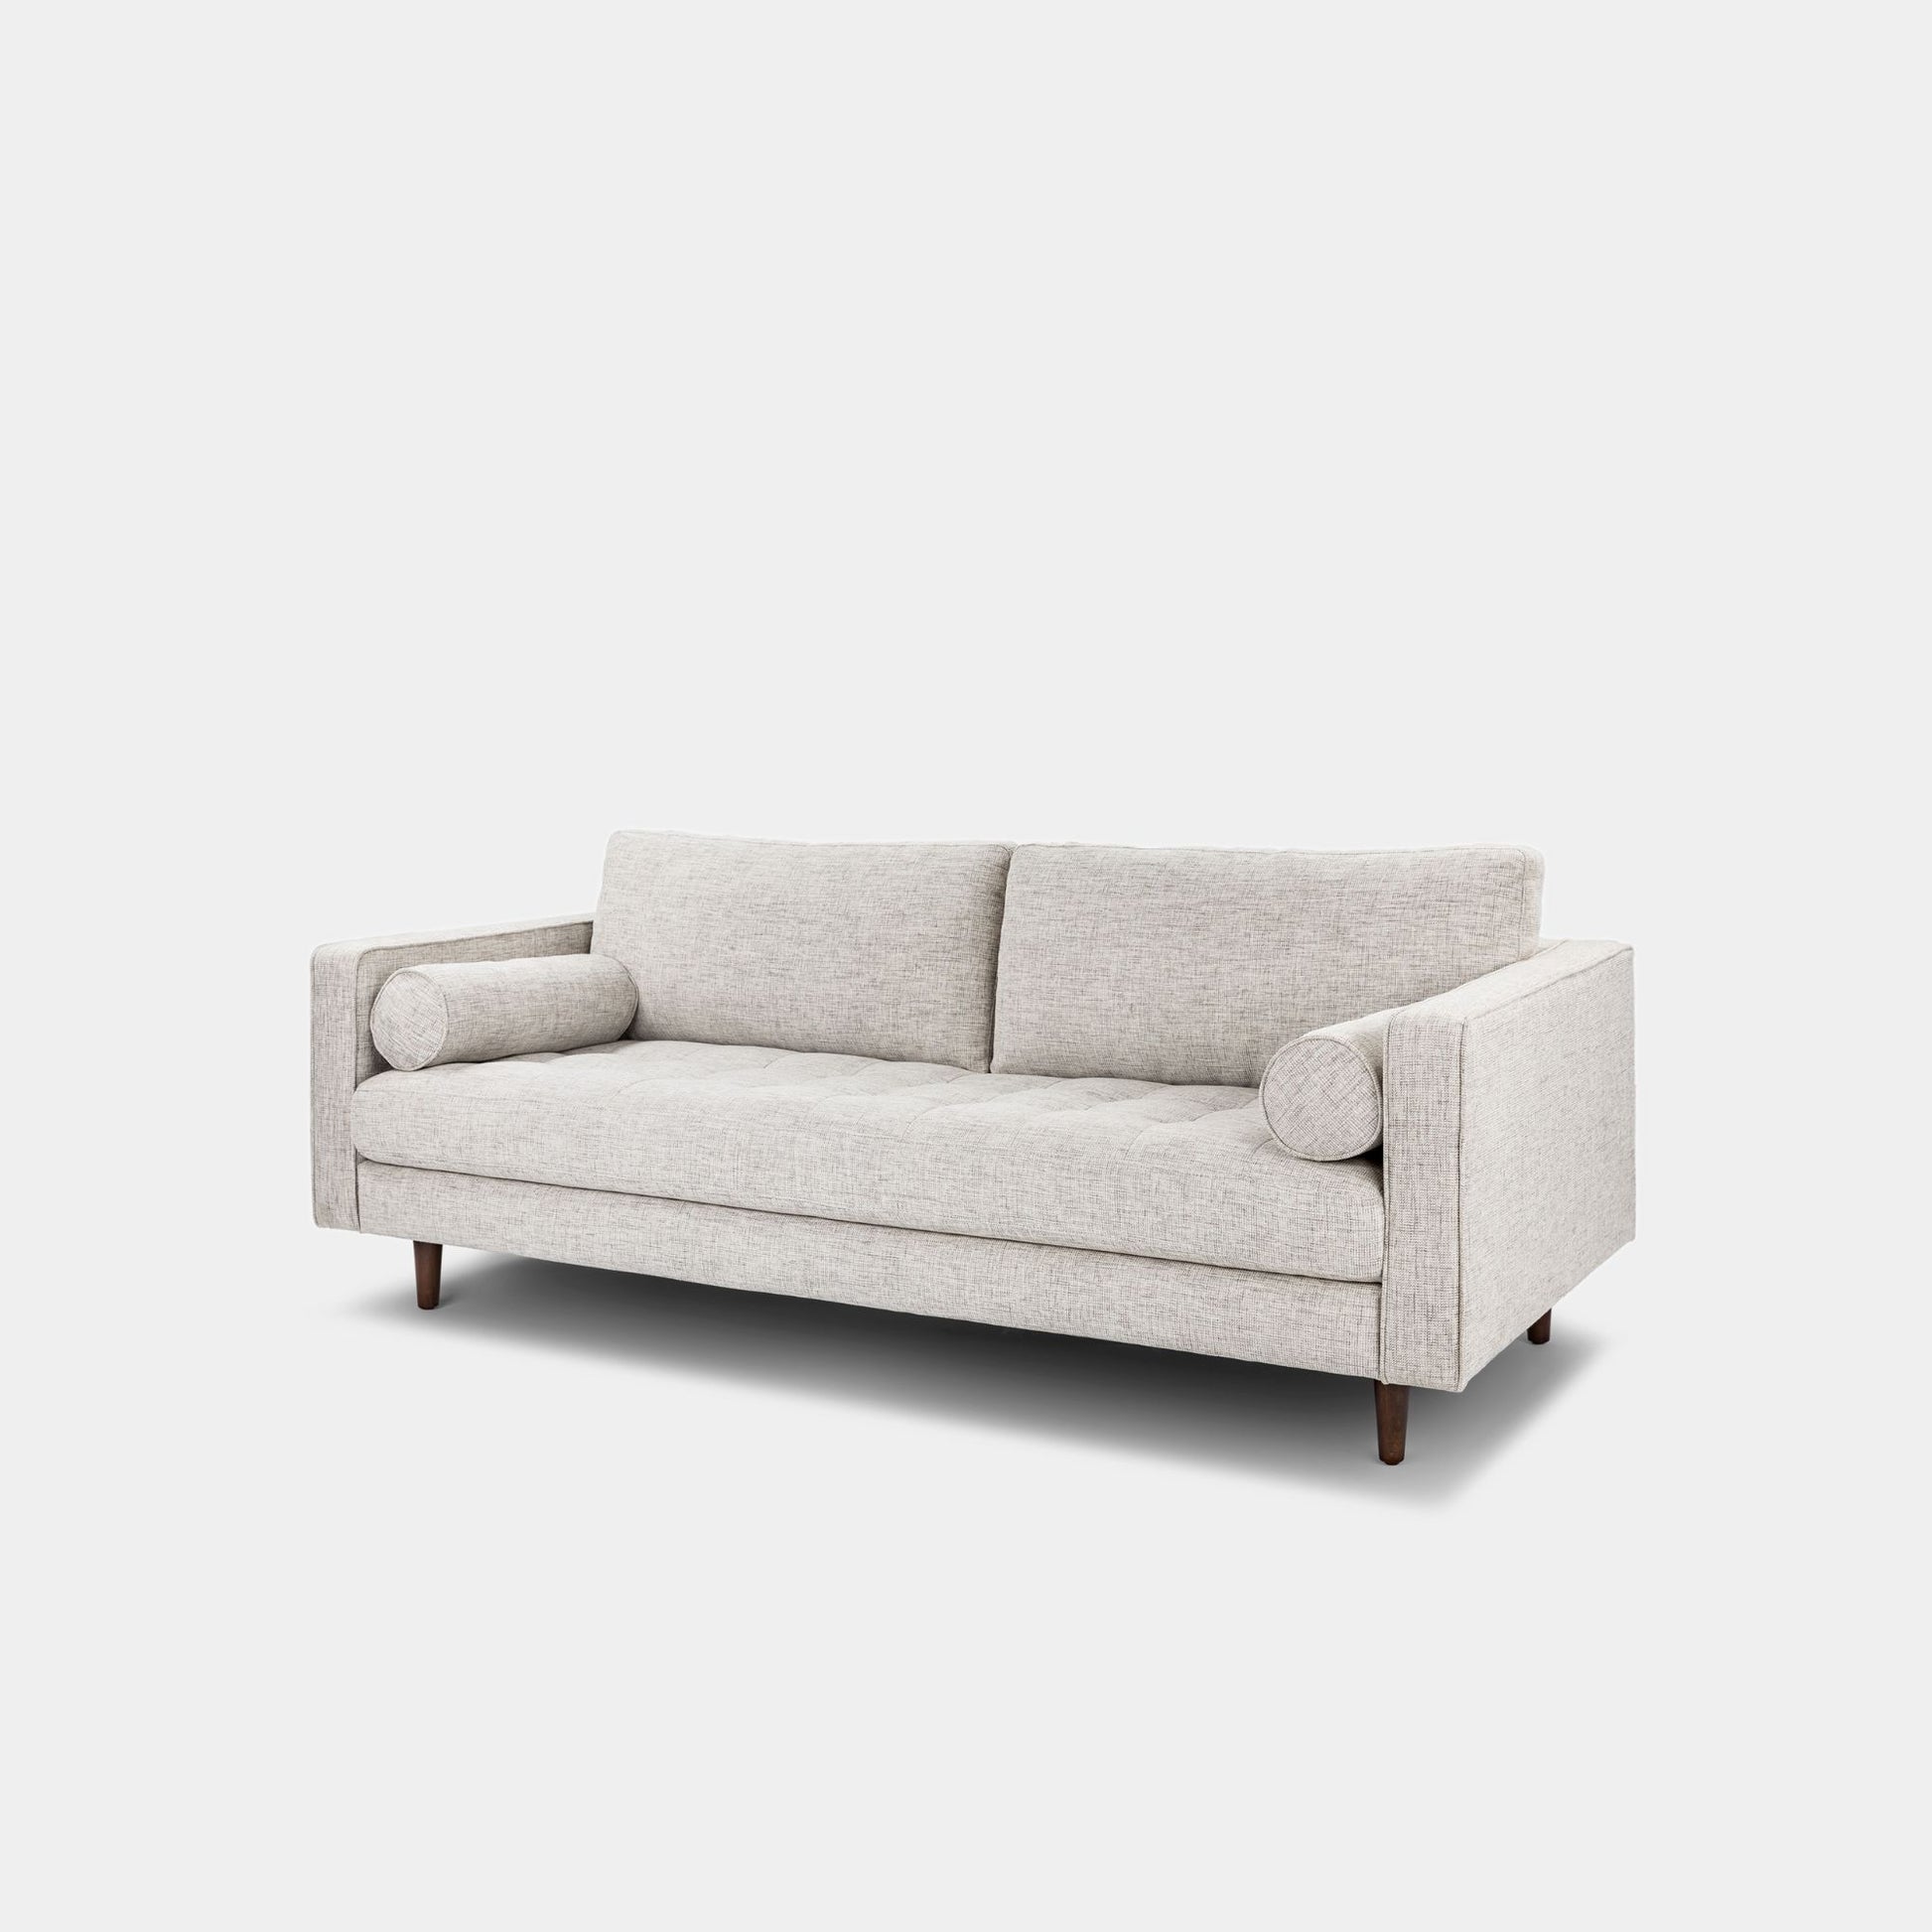 Castle fabric sofa white